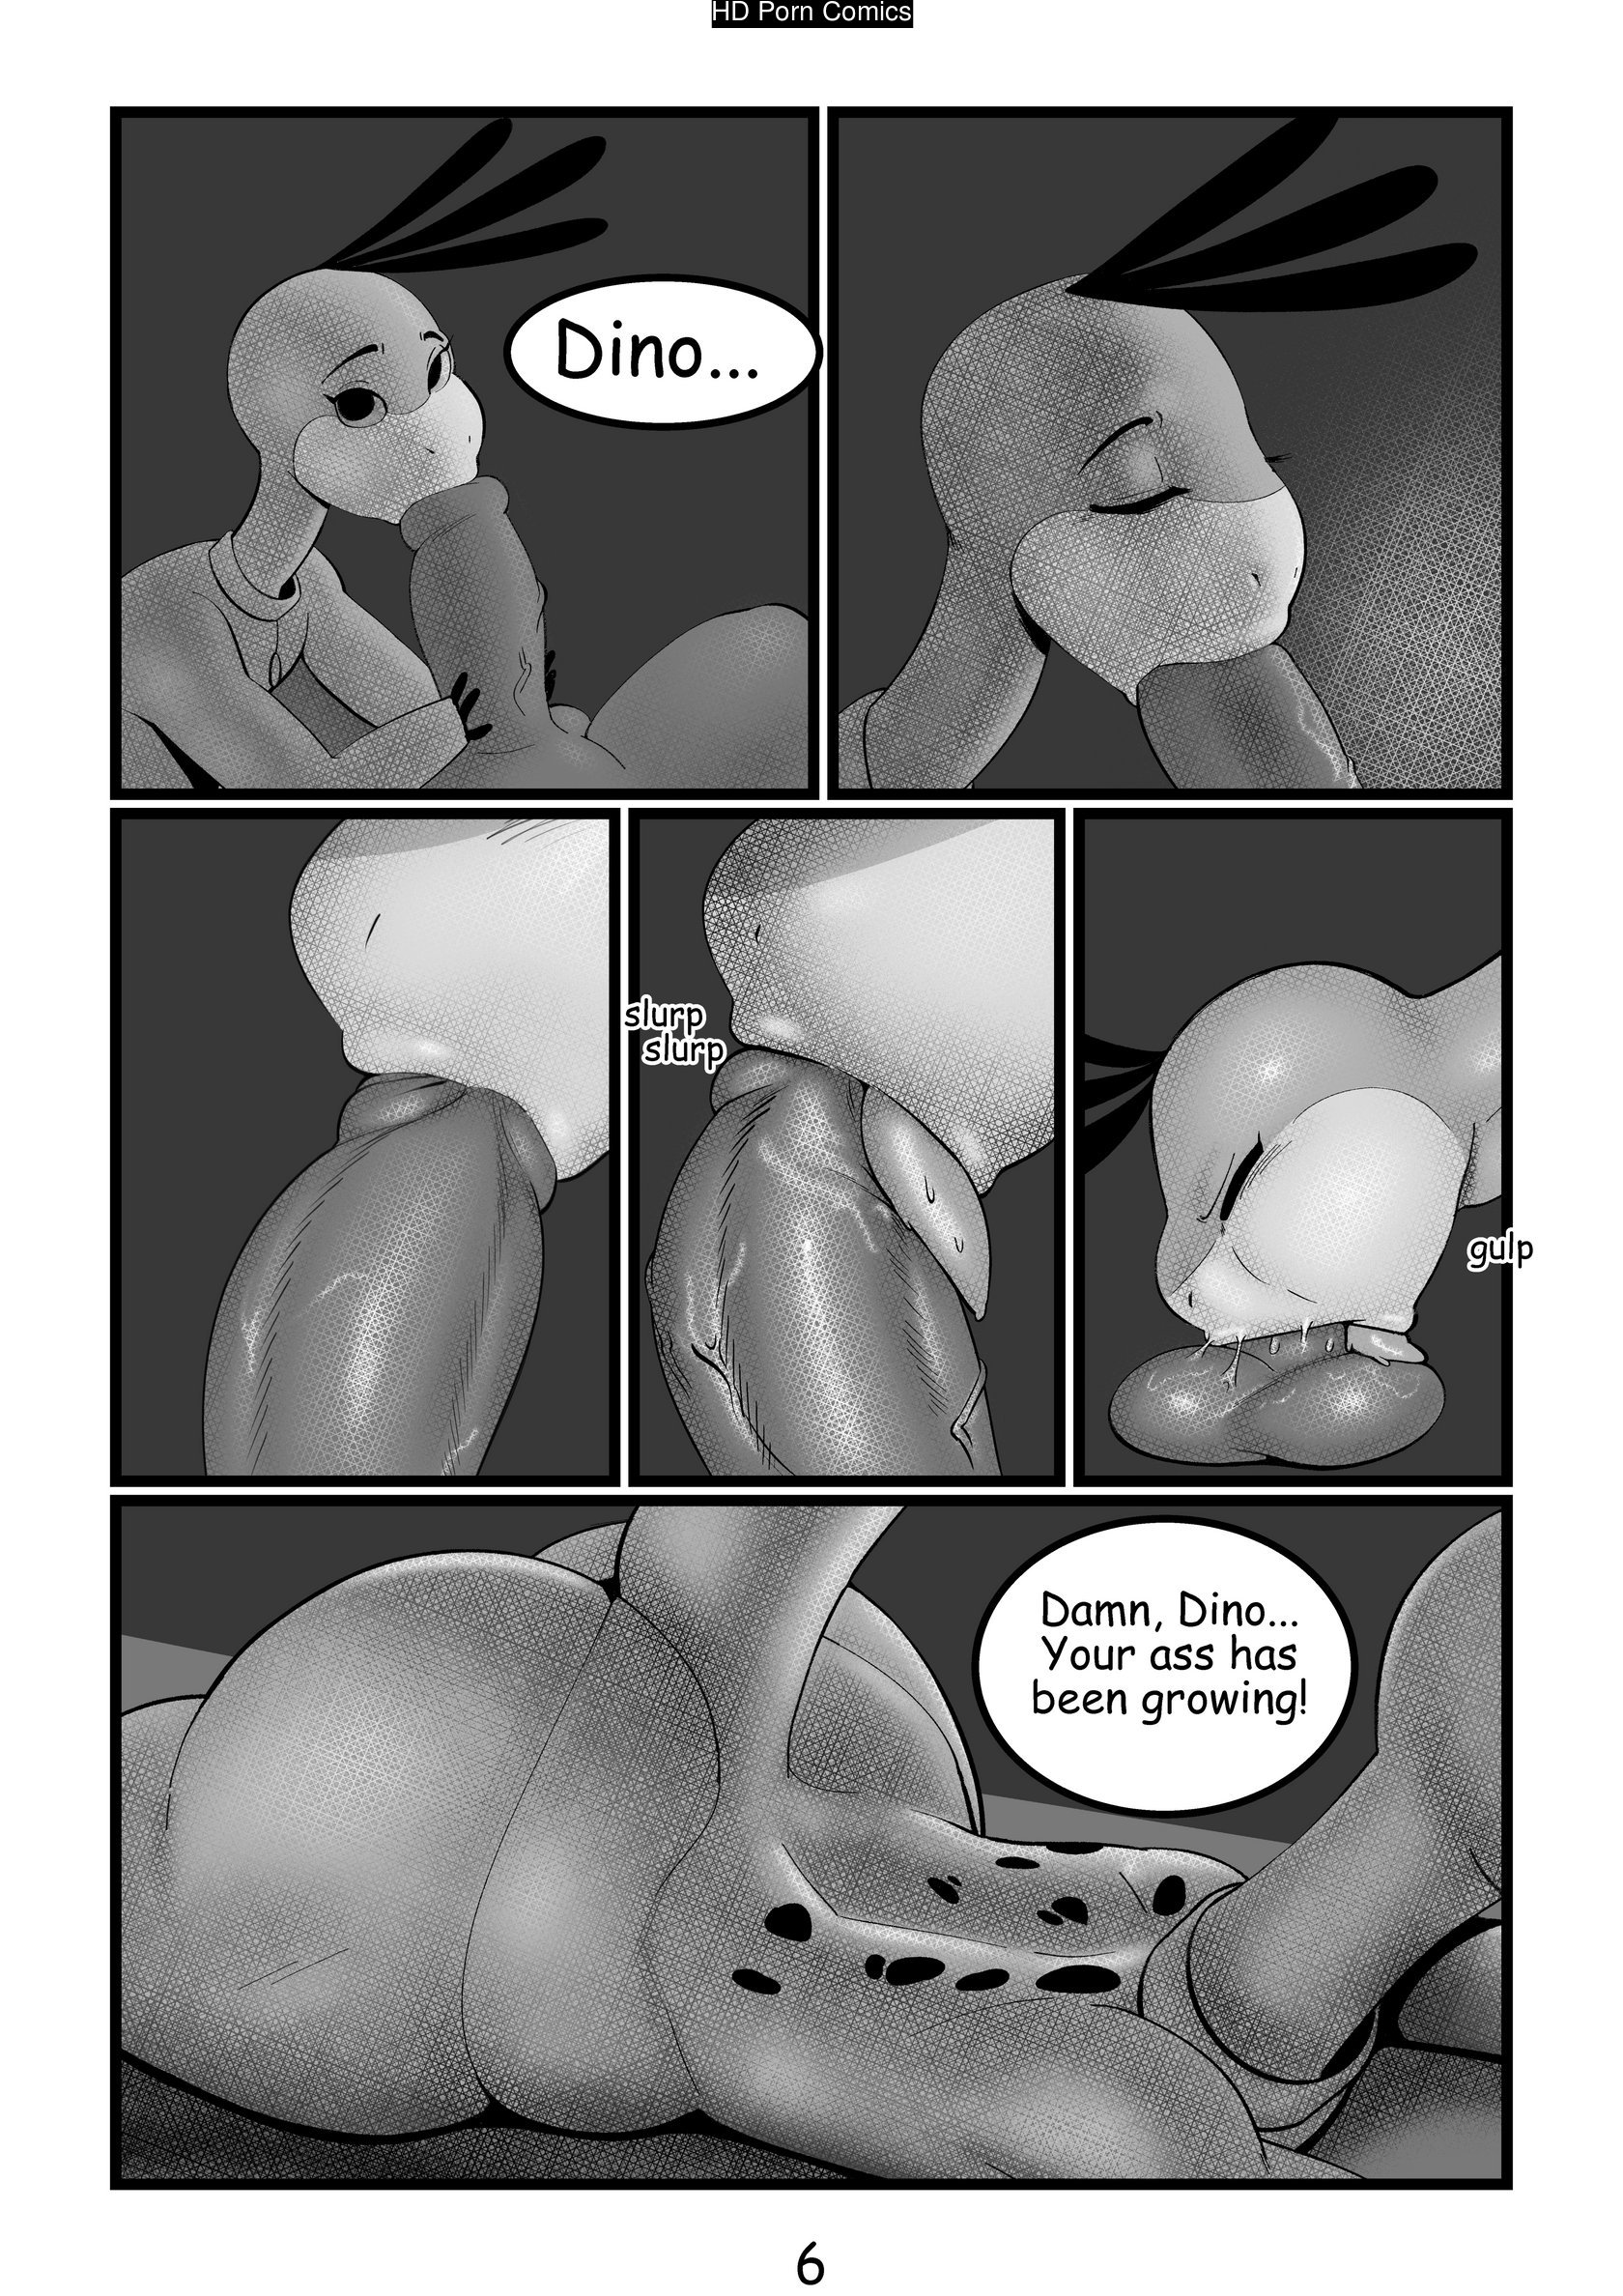 Dino comic porn - HD Porn Comics